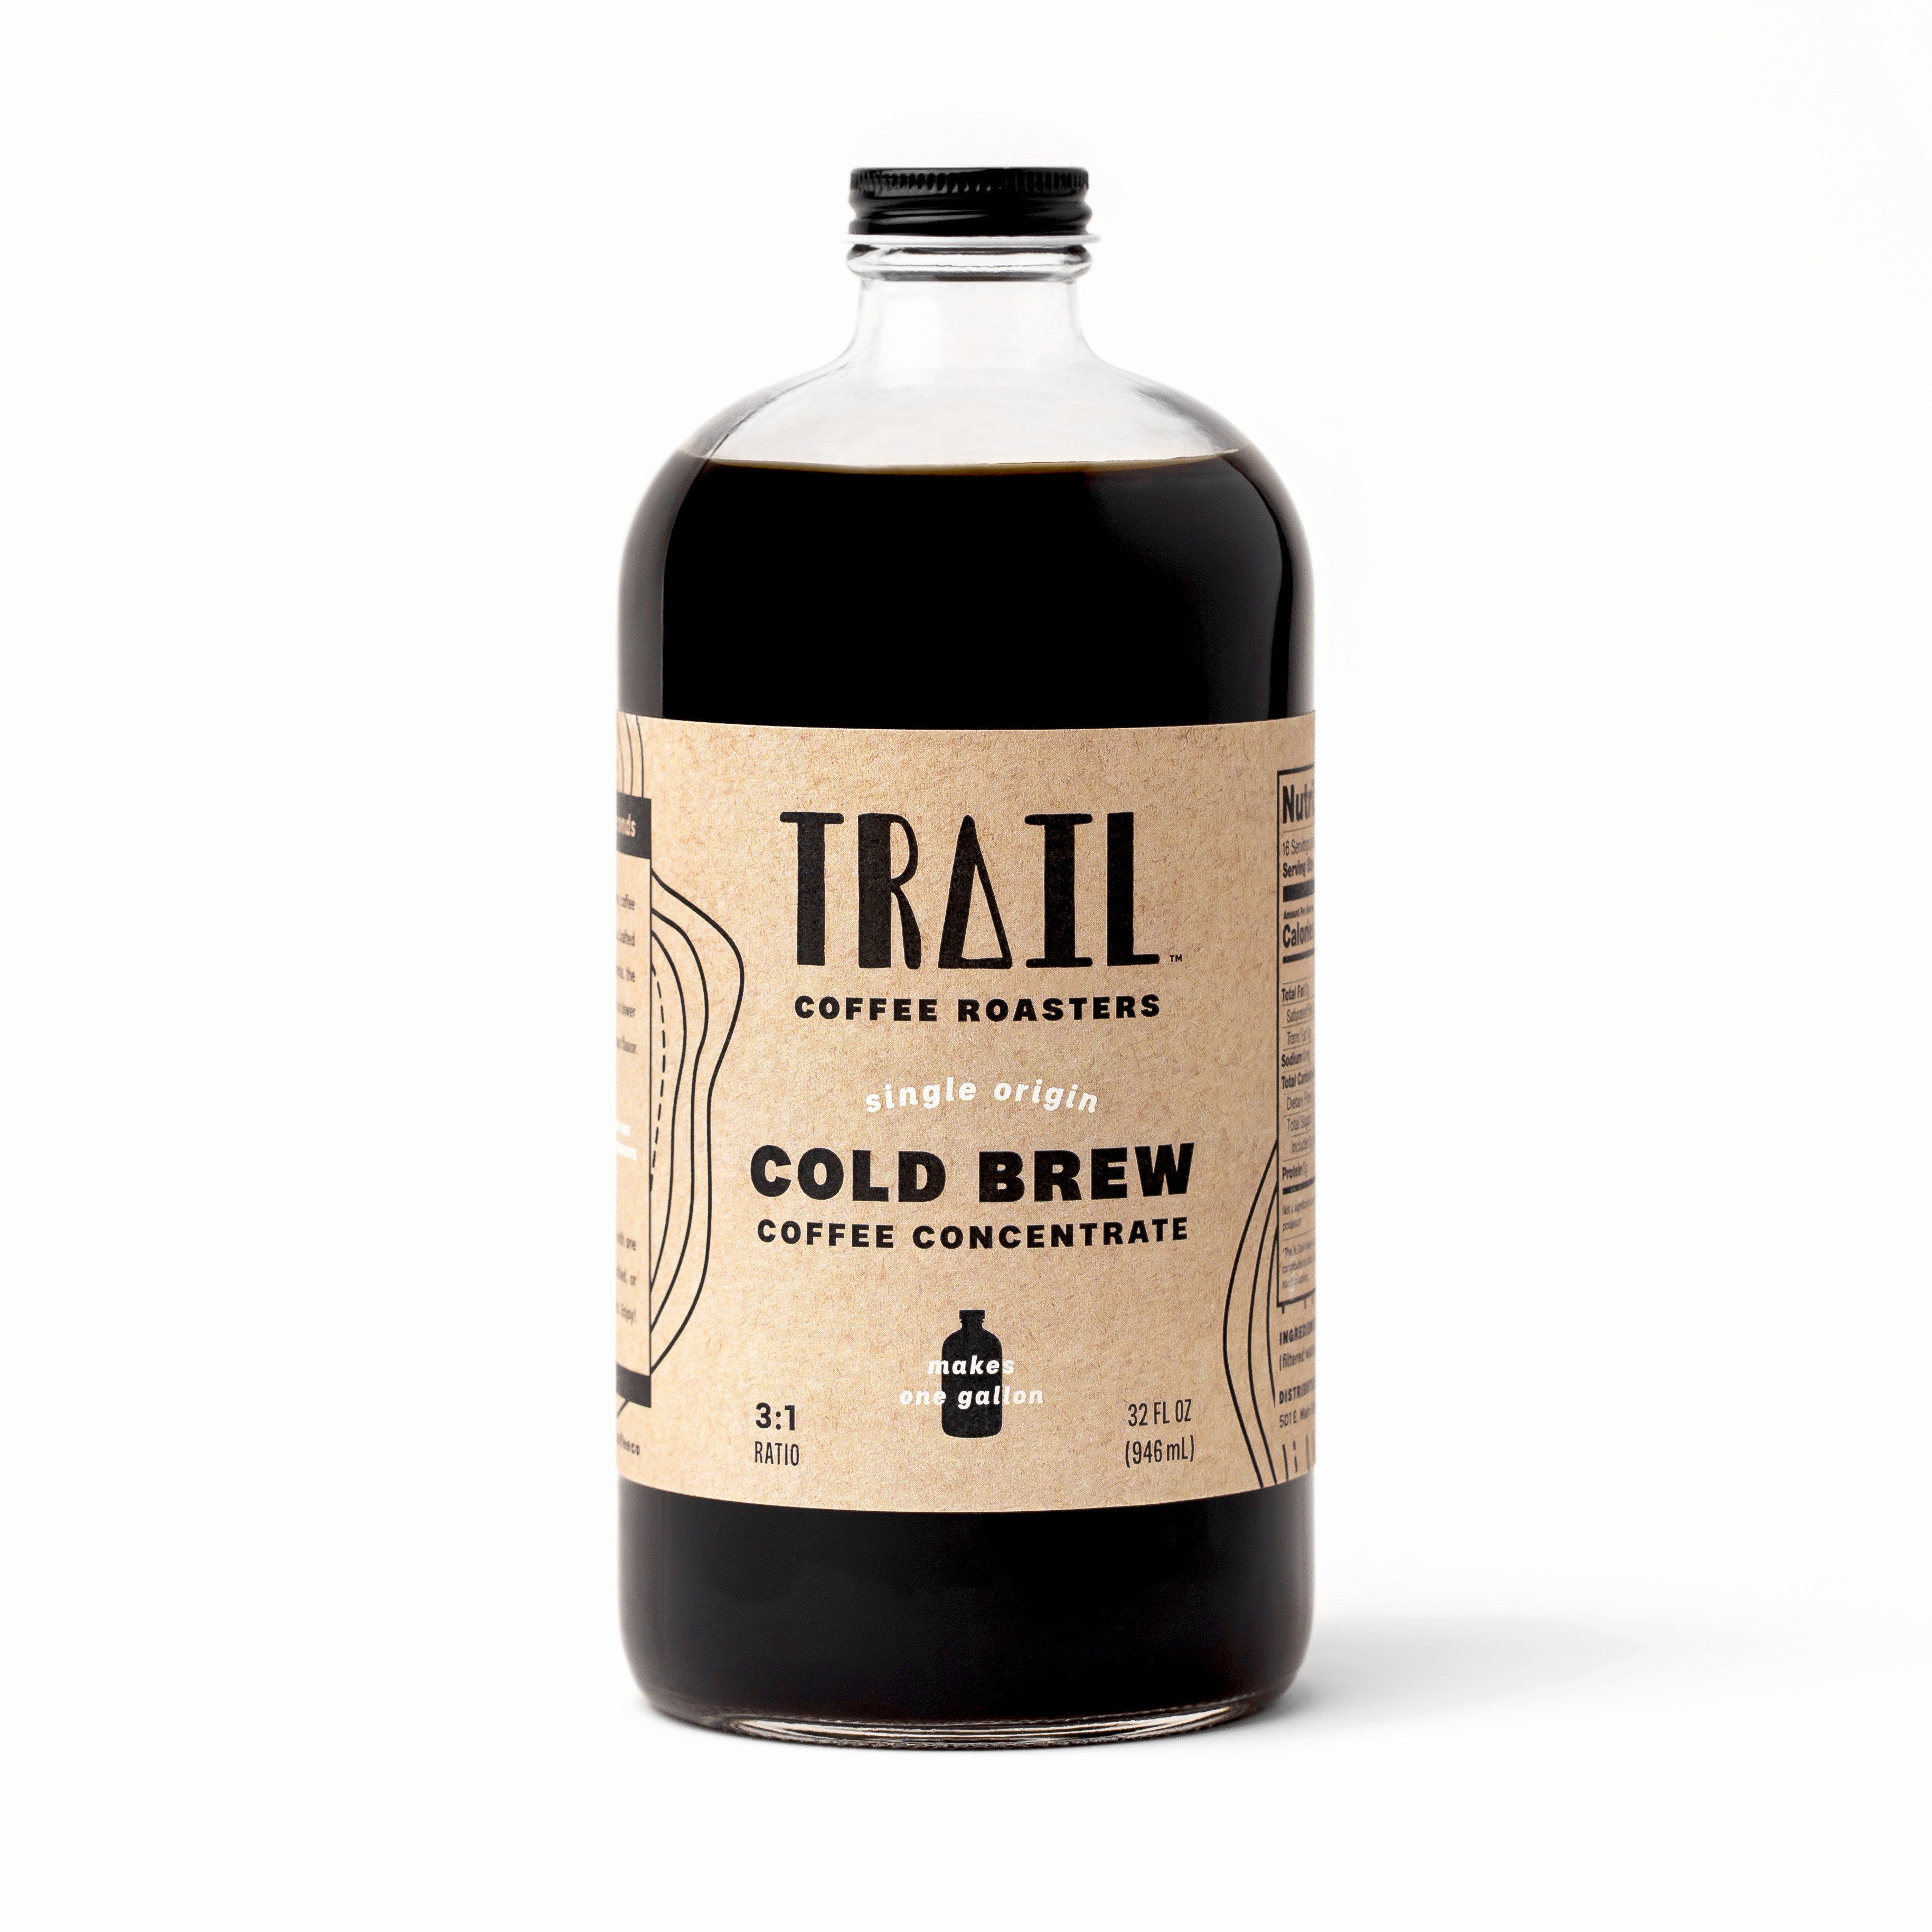 ColoRADo Style Cold Brew Kit - Rocky Mountain Roastery